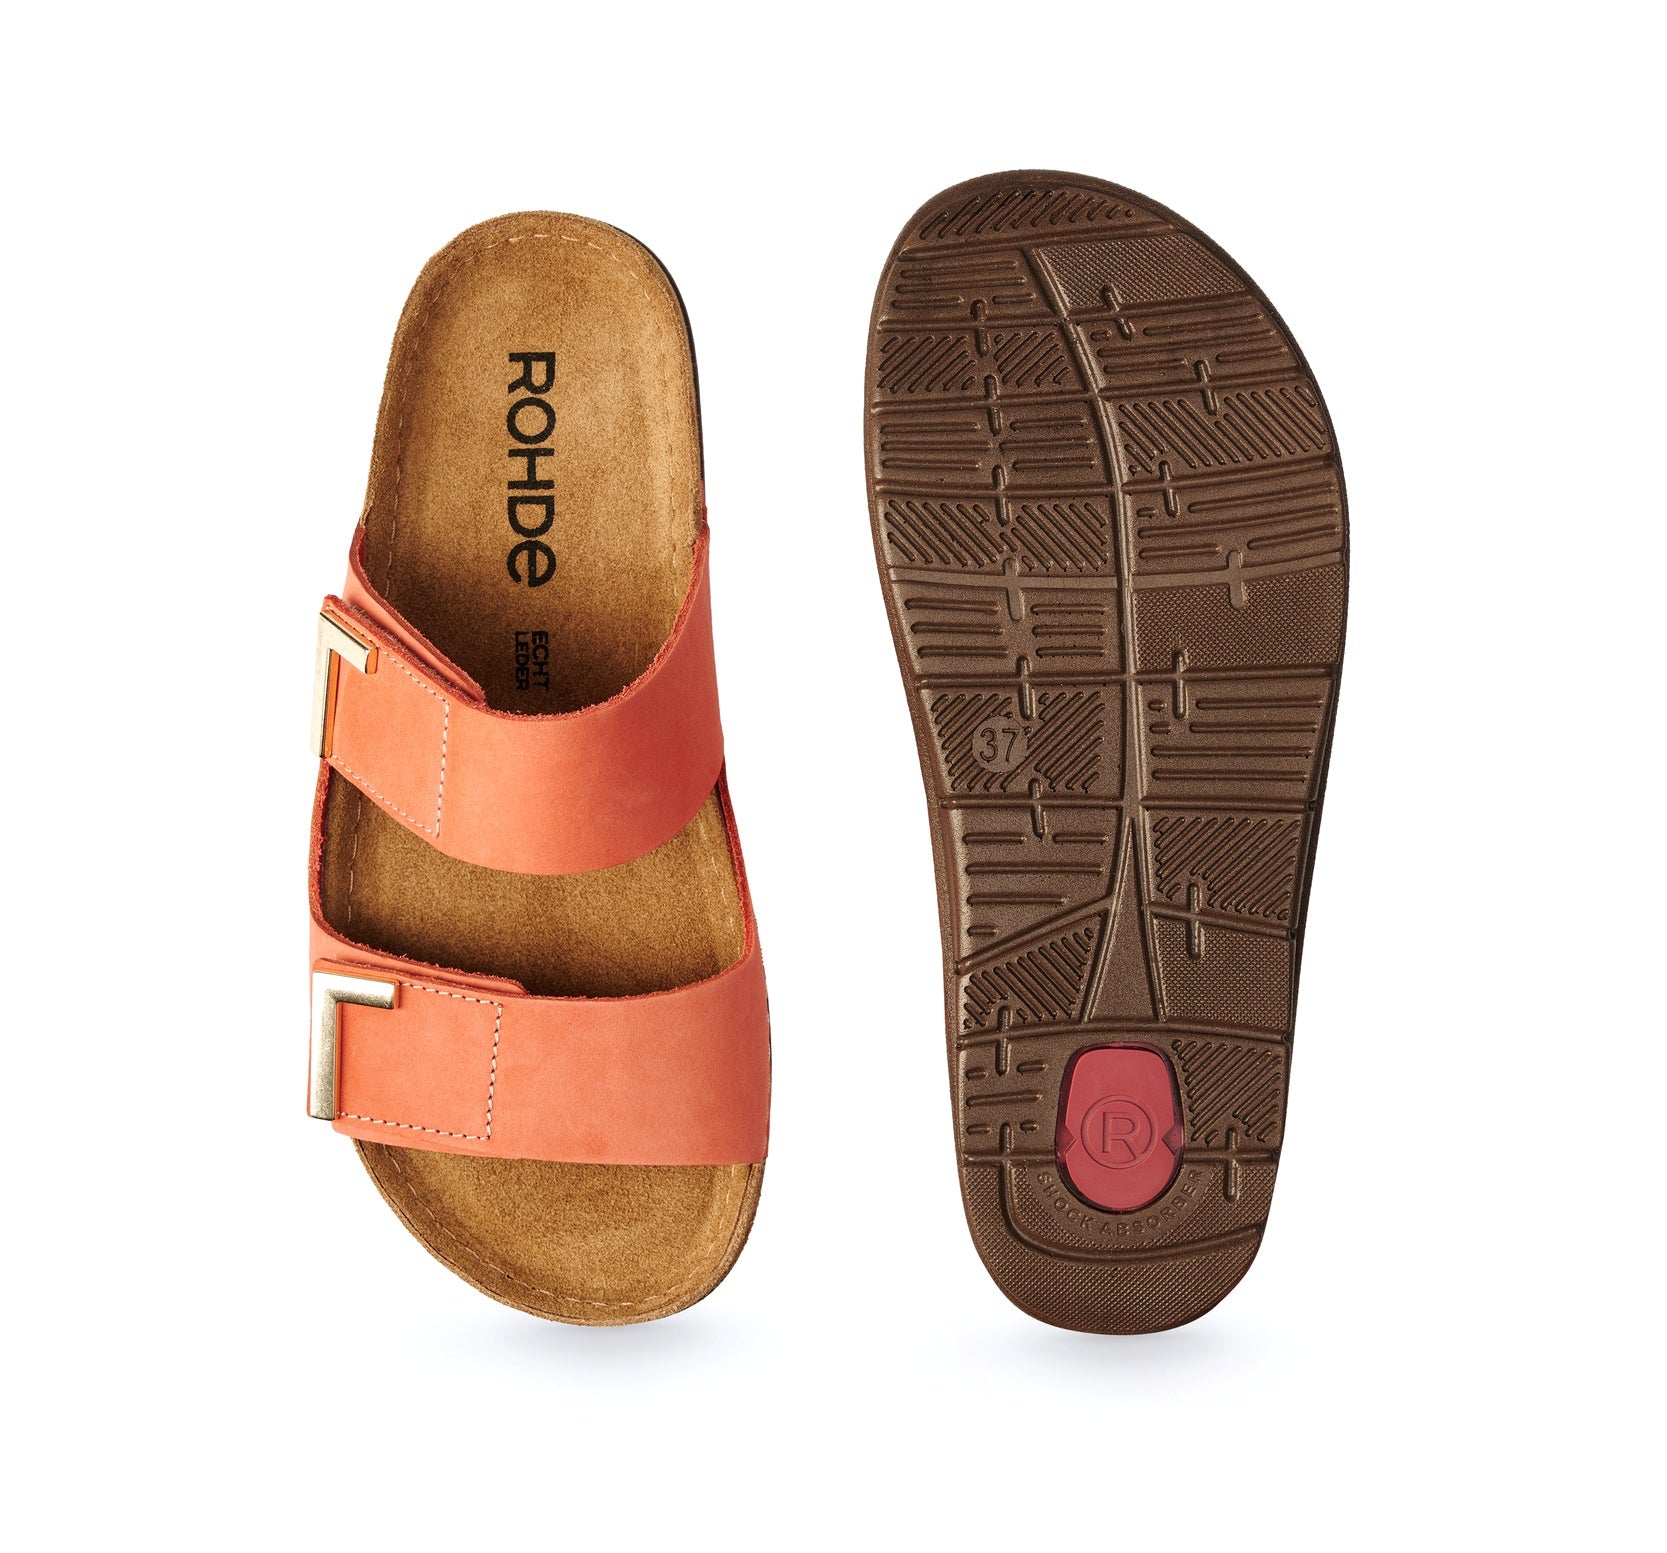 'Rodigo' women's sandal - Orange - Chaplinshoes'Rodigo' women's sandal - OrangeRohde